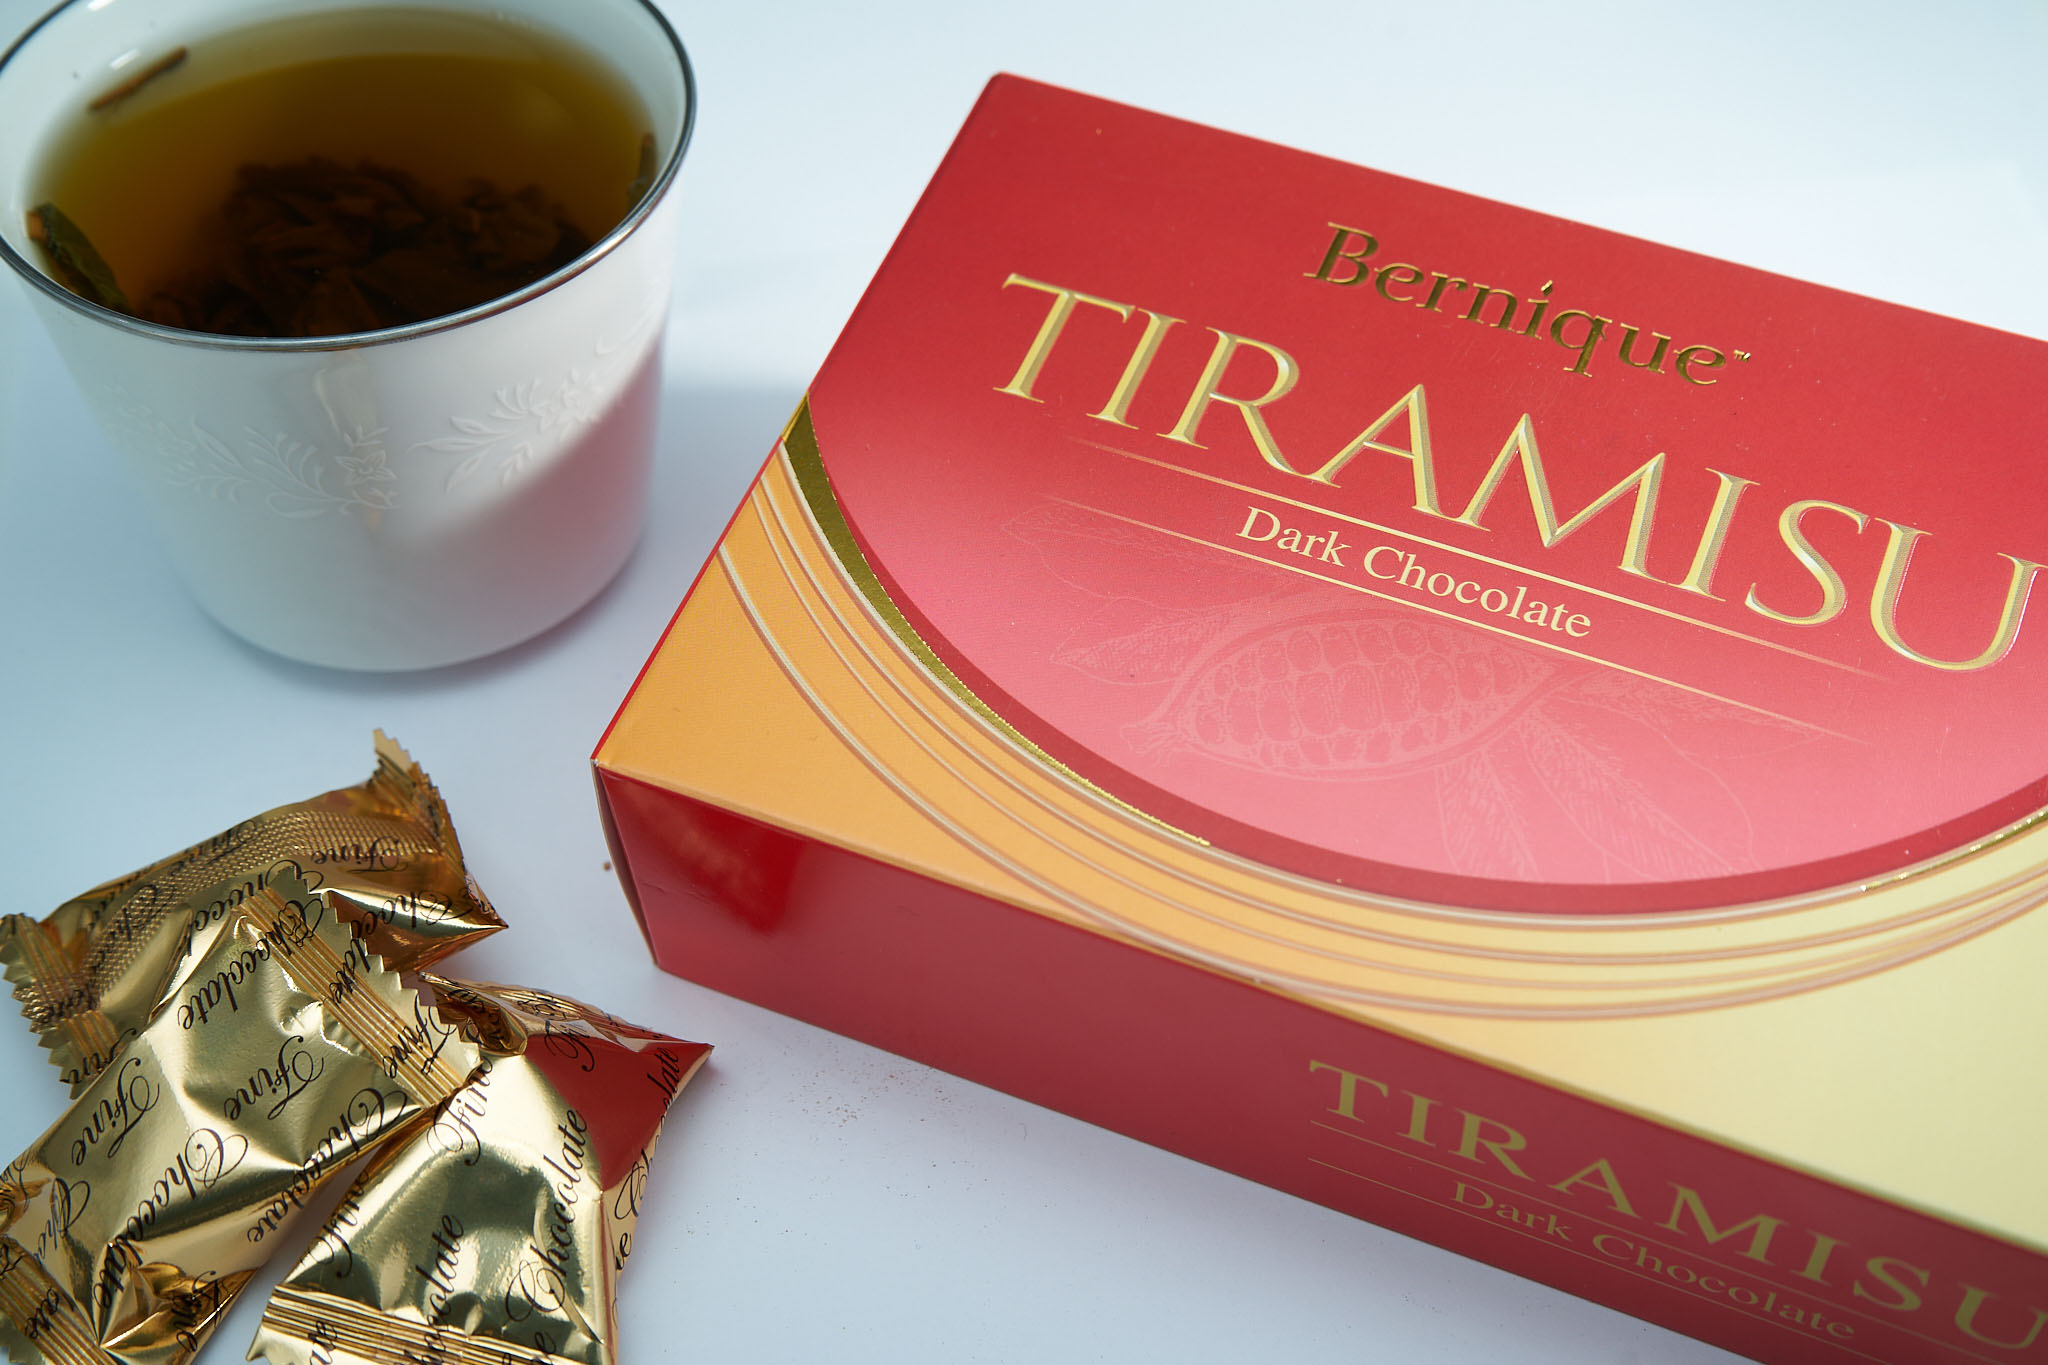 HCMCHOCOLATE ĐEN TIRAMISU BERNIQUE - BERNIQUE TIRAMISU DARK CHOCOLATE